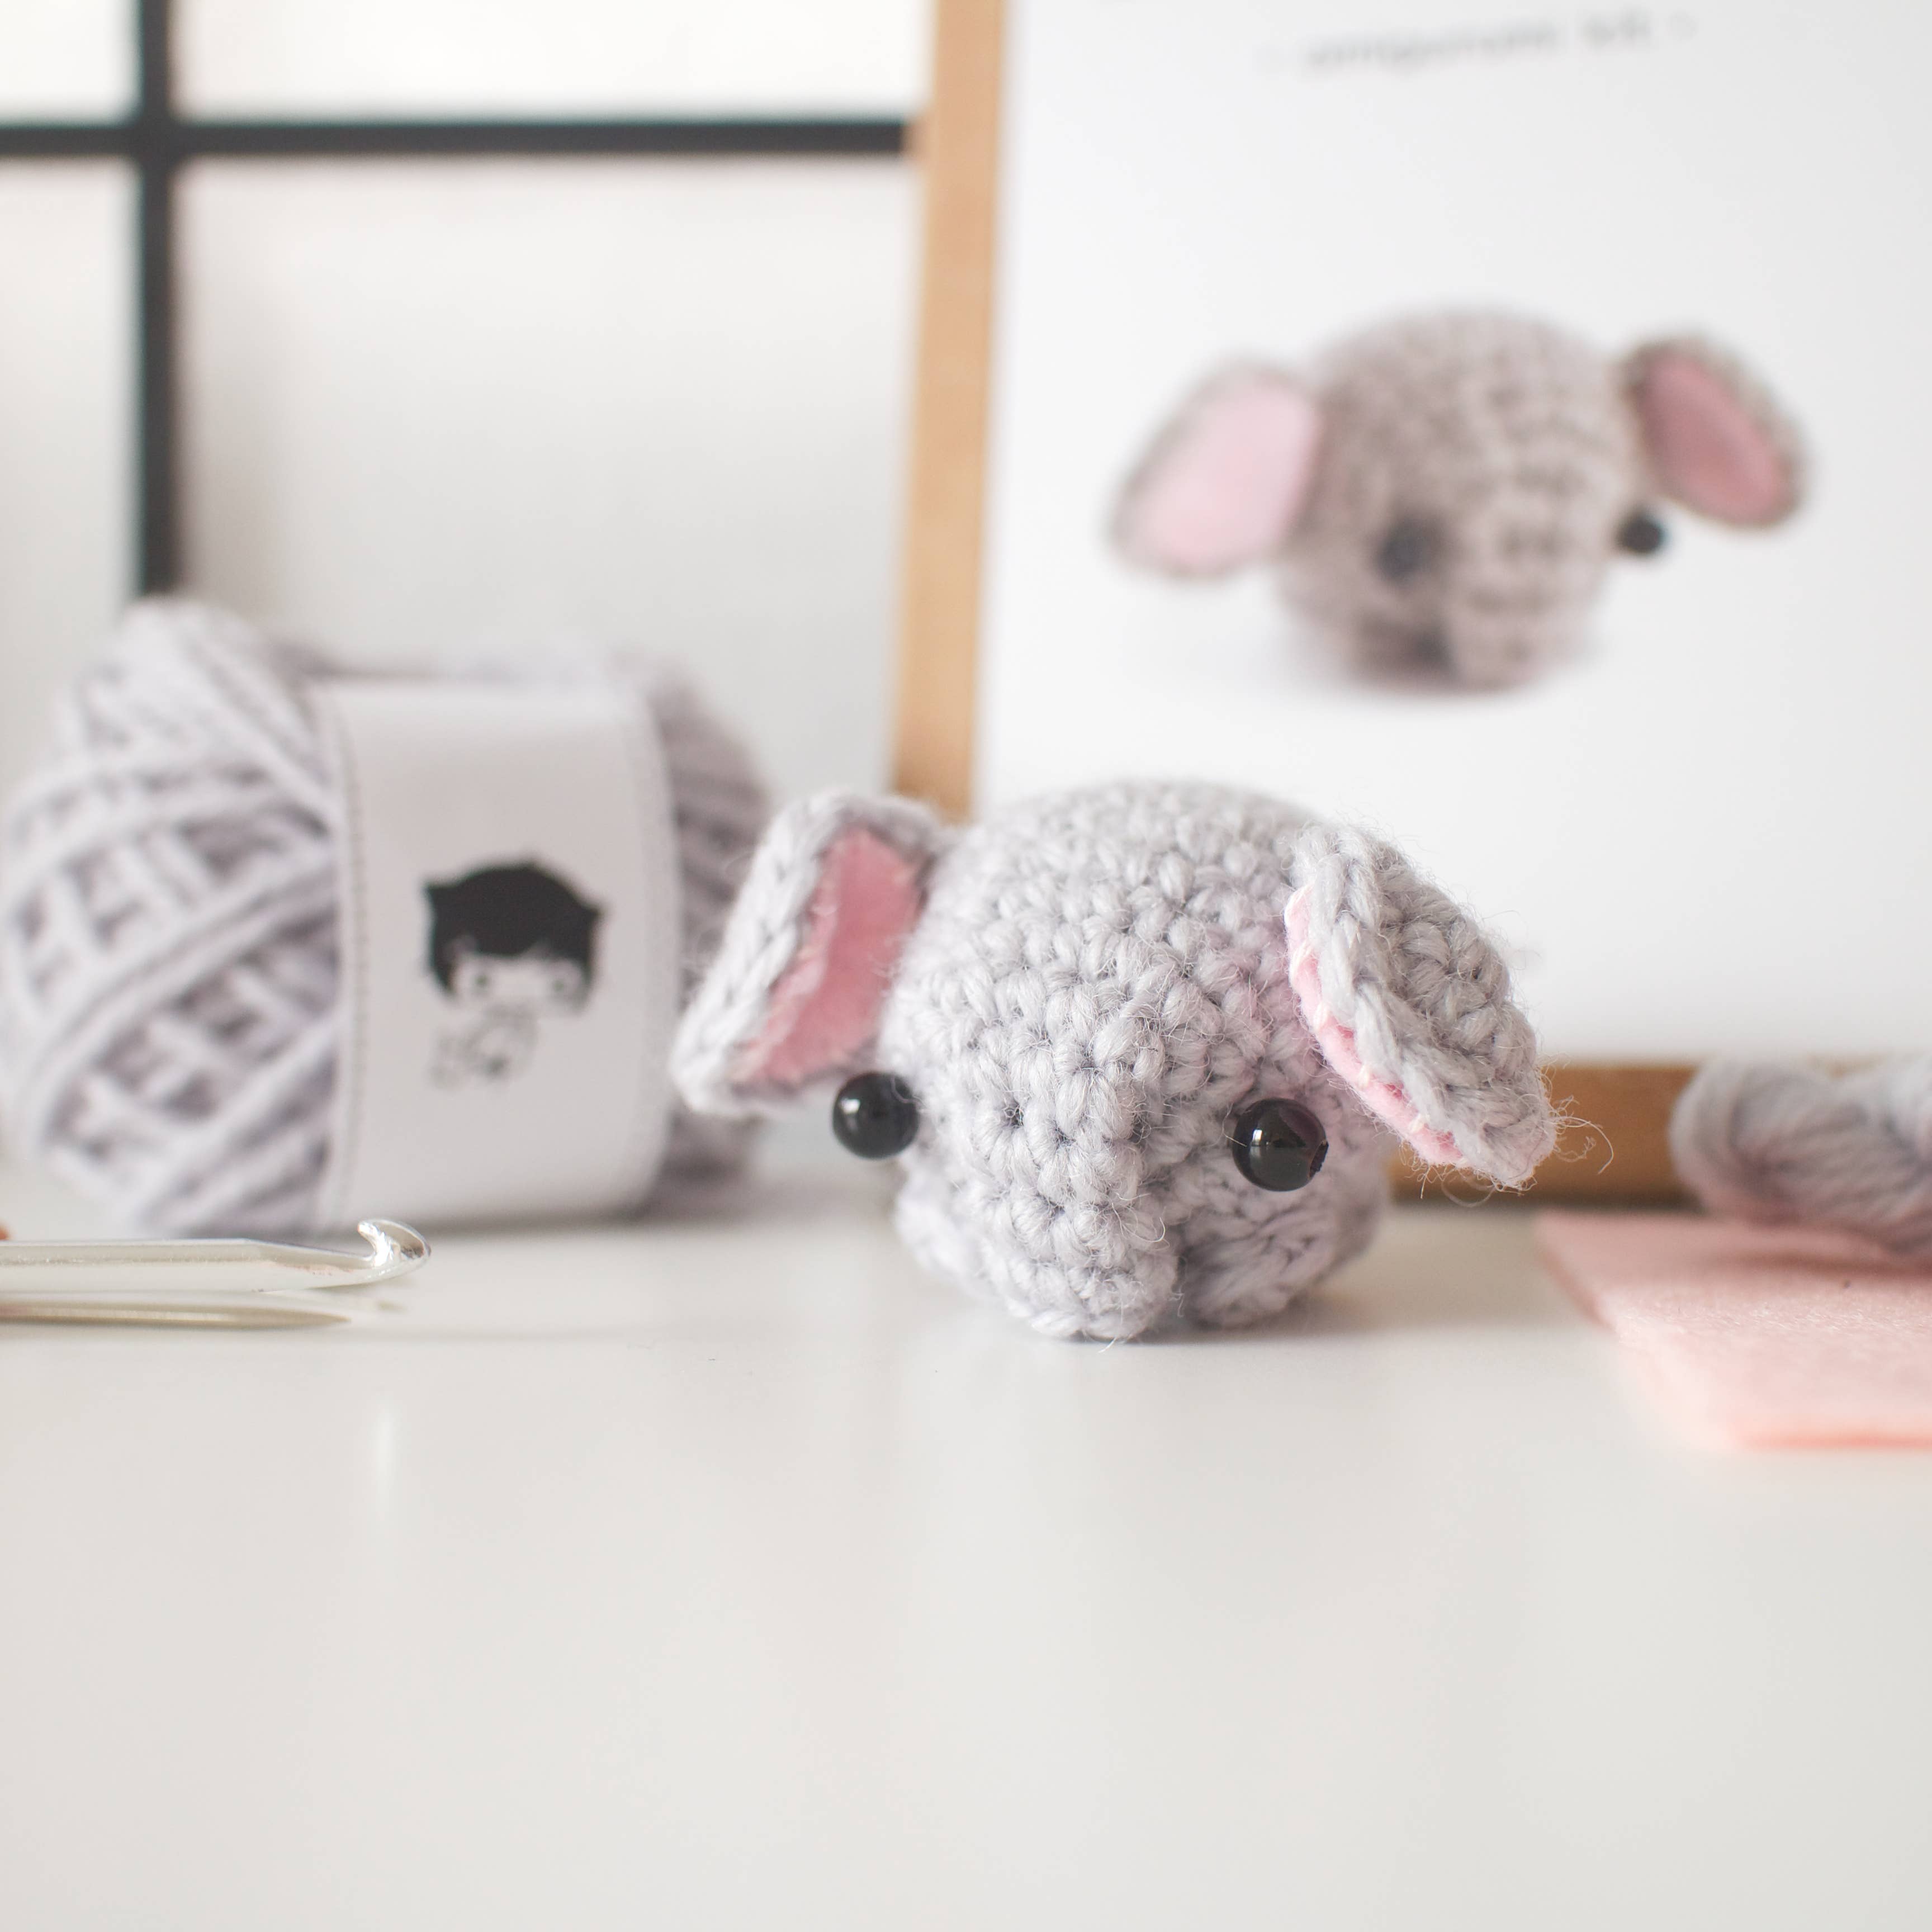 Mohu - Crochet kit - amigurumi elephant diy craft kit